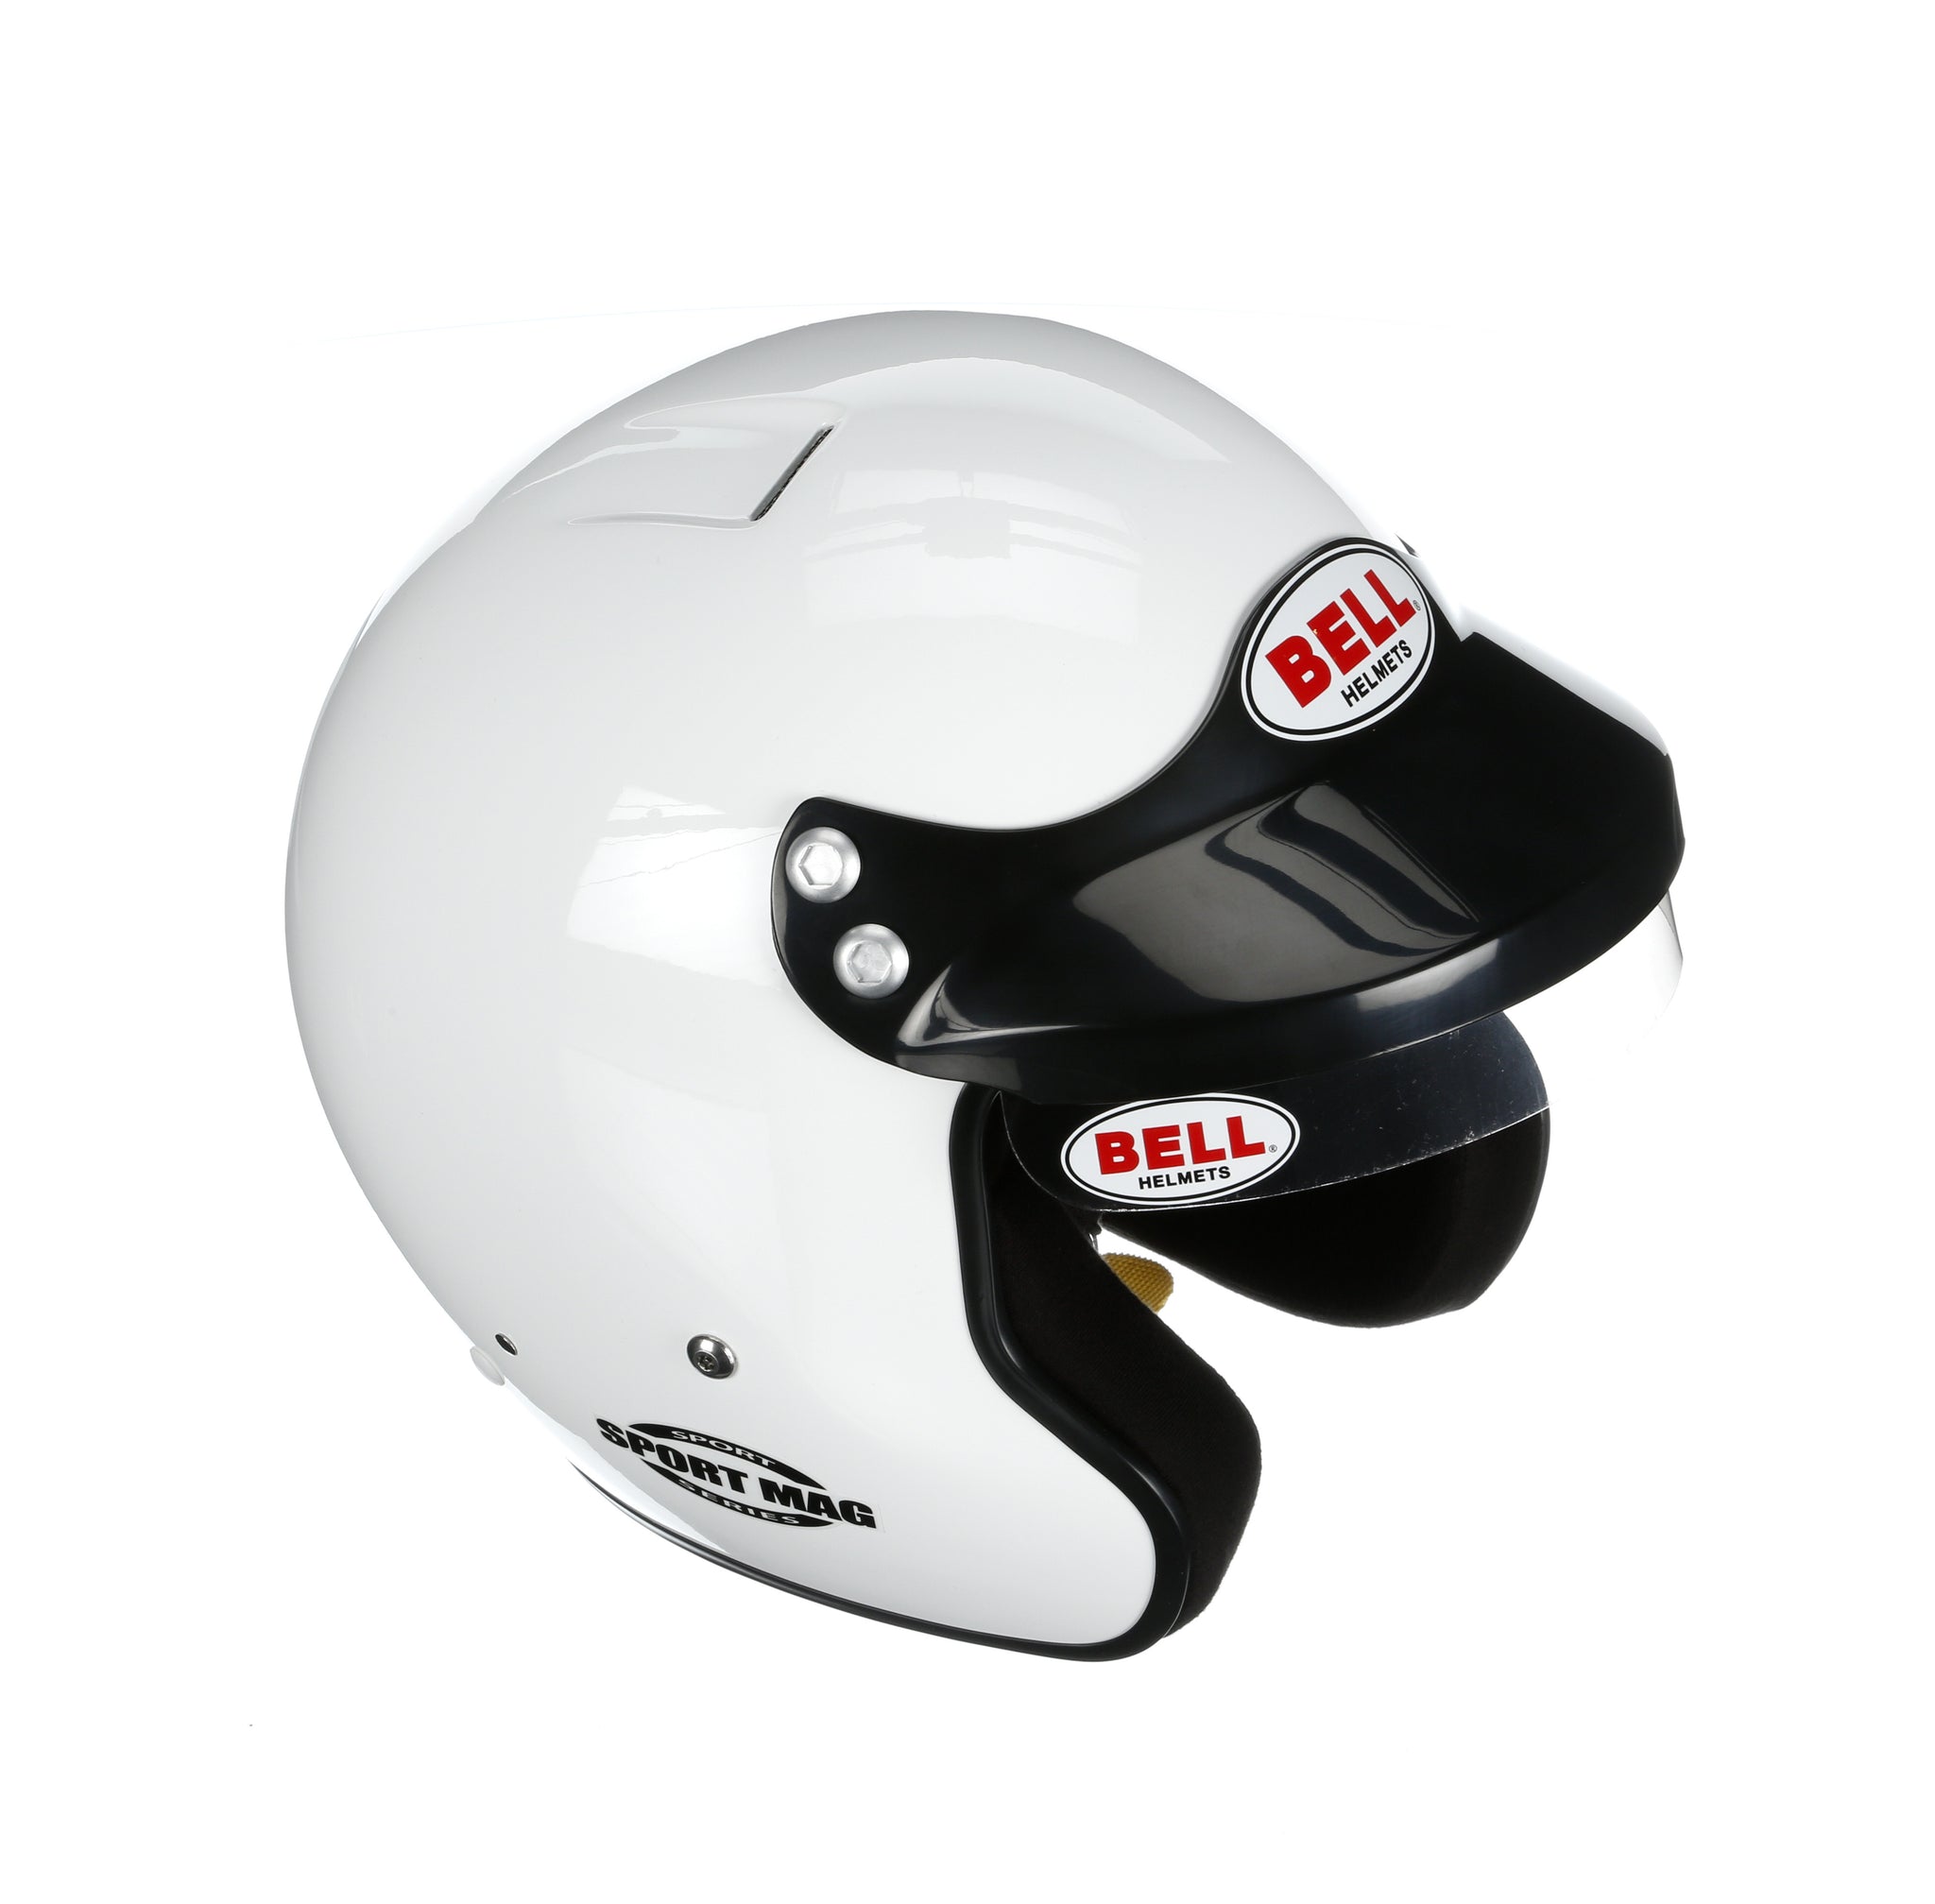 Bell SA2020 Sport Mag - SA2020 V.15 BRUS Helmet